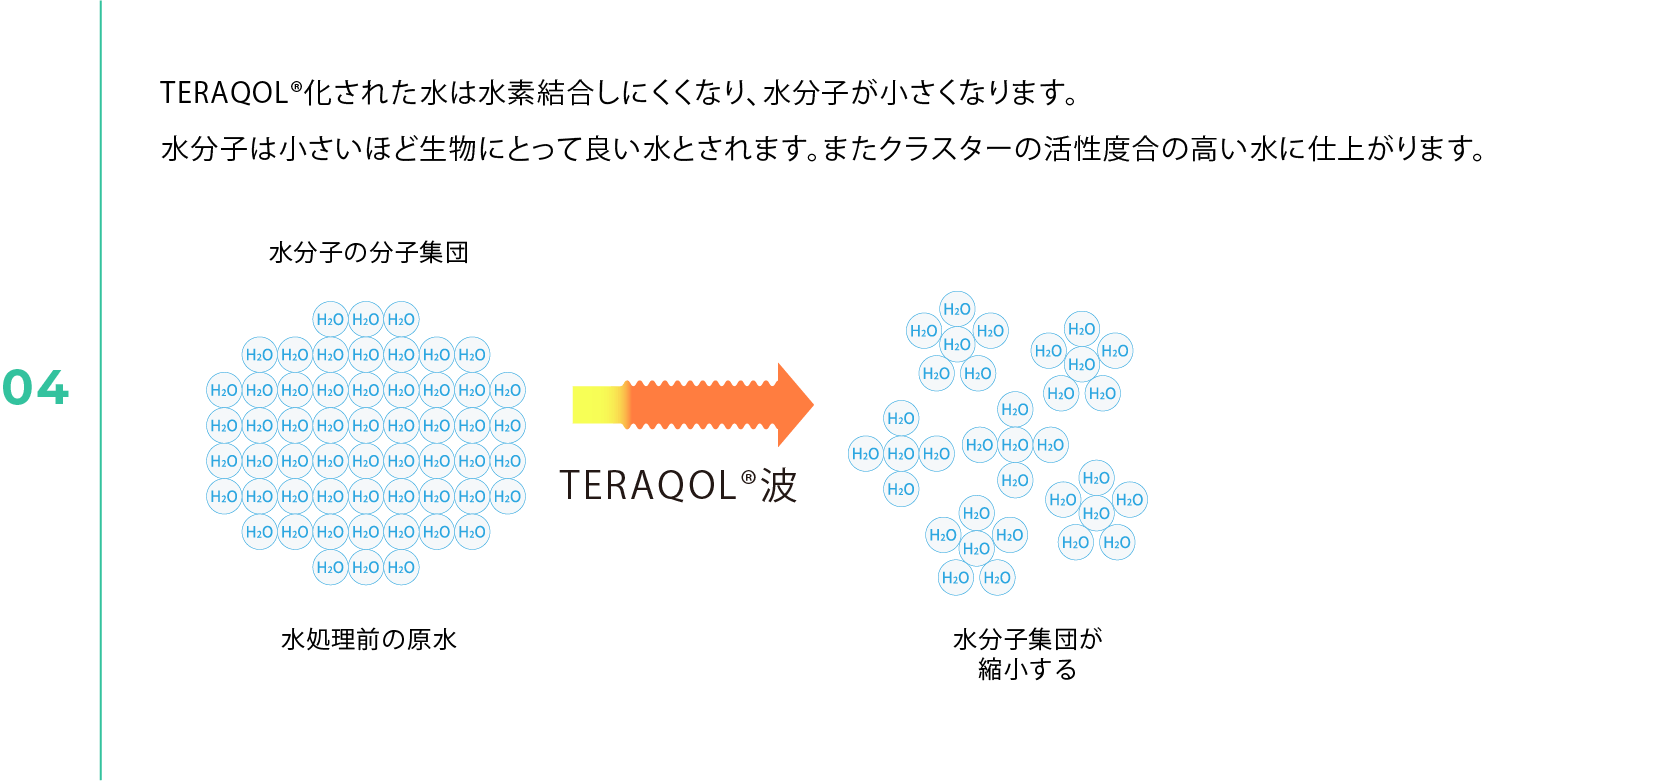 TERAQOL ® 化した水のクラスターの縮小